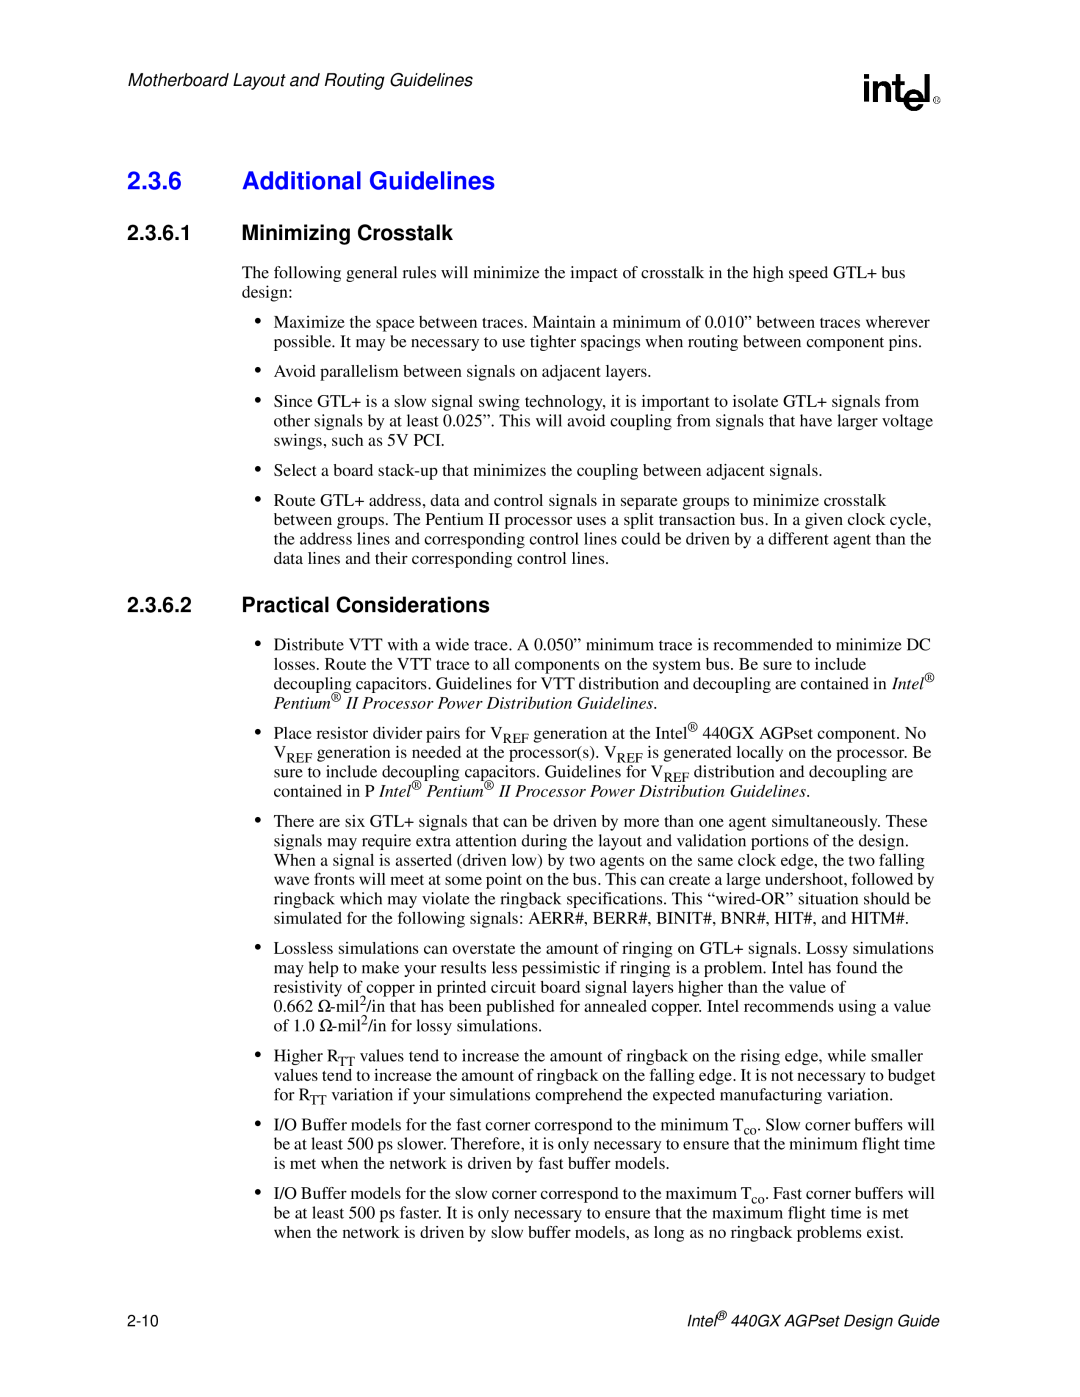 Intel 440GX manual Additional Guidelines, Minimizing Crosstalk, Practical Considerations 